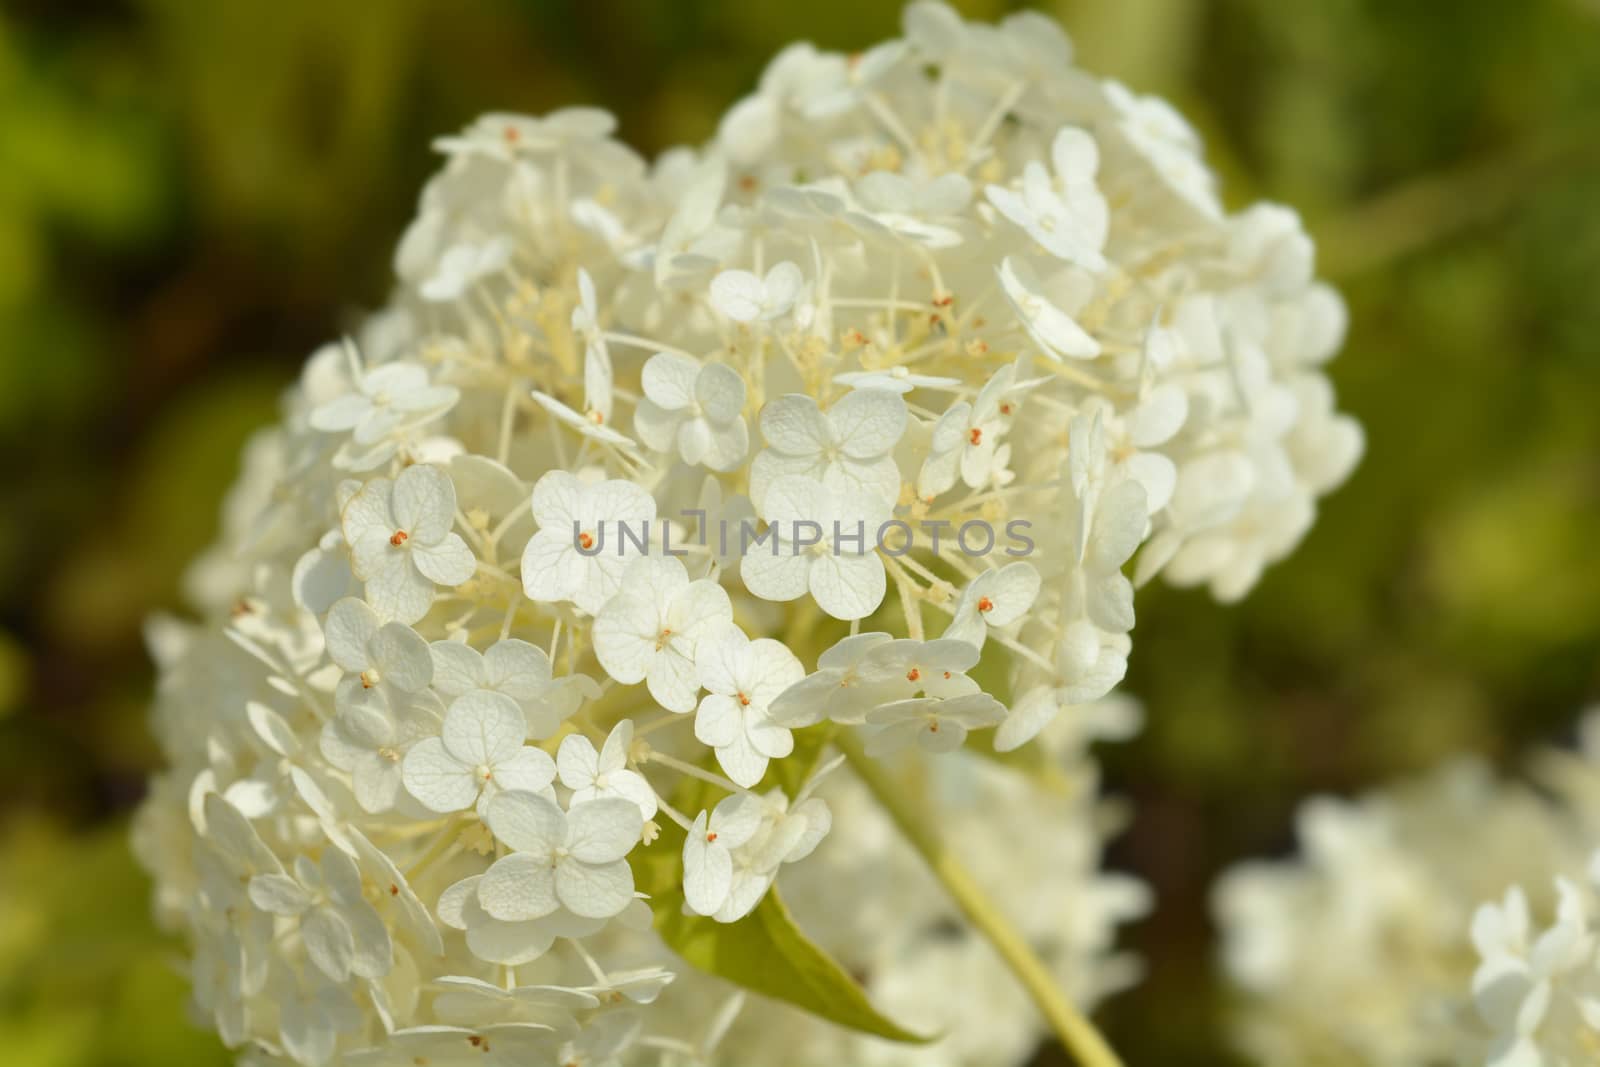 Smooth hydrangea Annabelle flower - Latin name - Hydrangea arborescens Annabelle